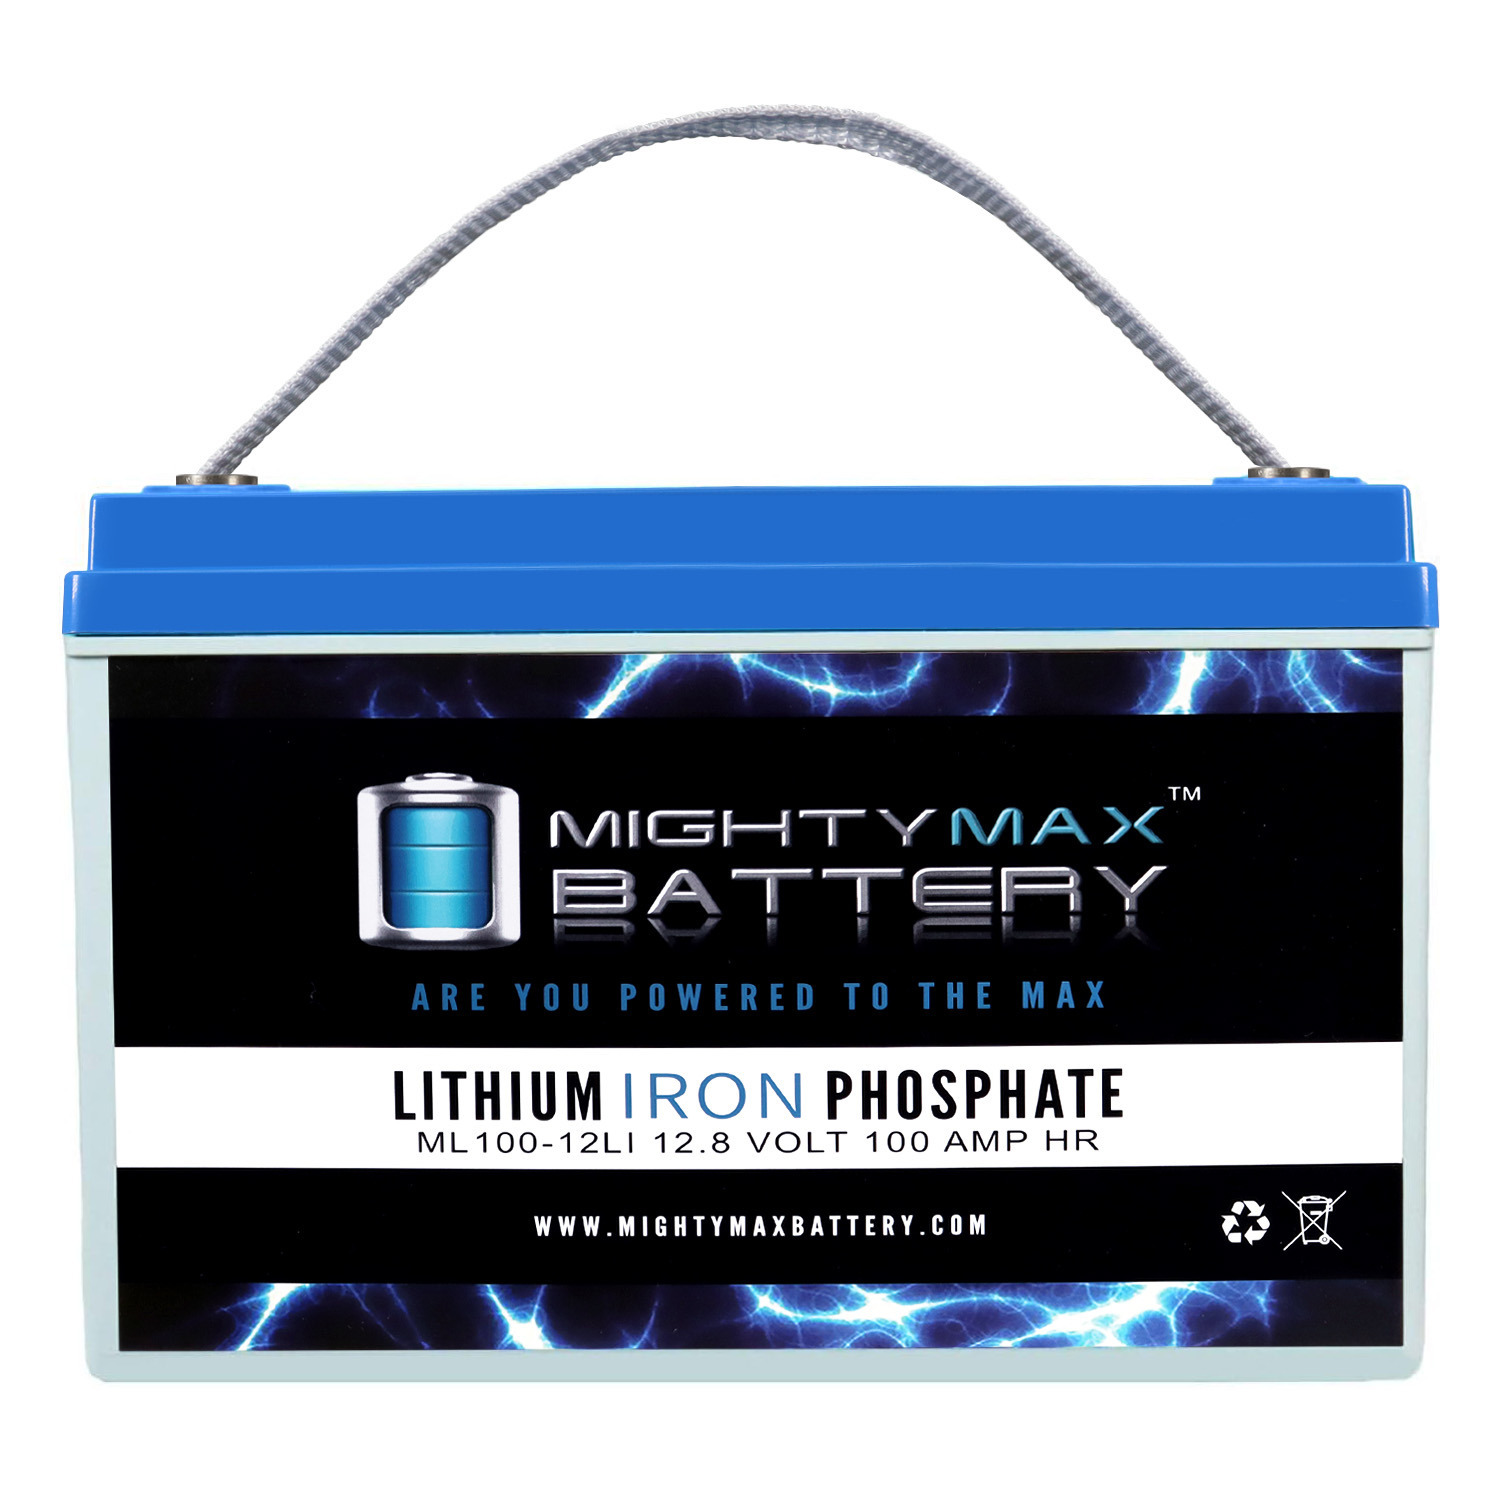 Batterie Solaire HORONYA Rechargeable CJ12-100-12V-100AH AK00243 - Sodishop